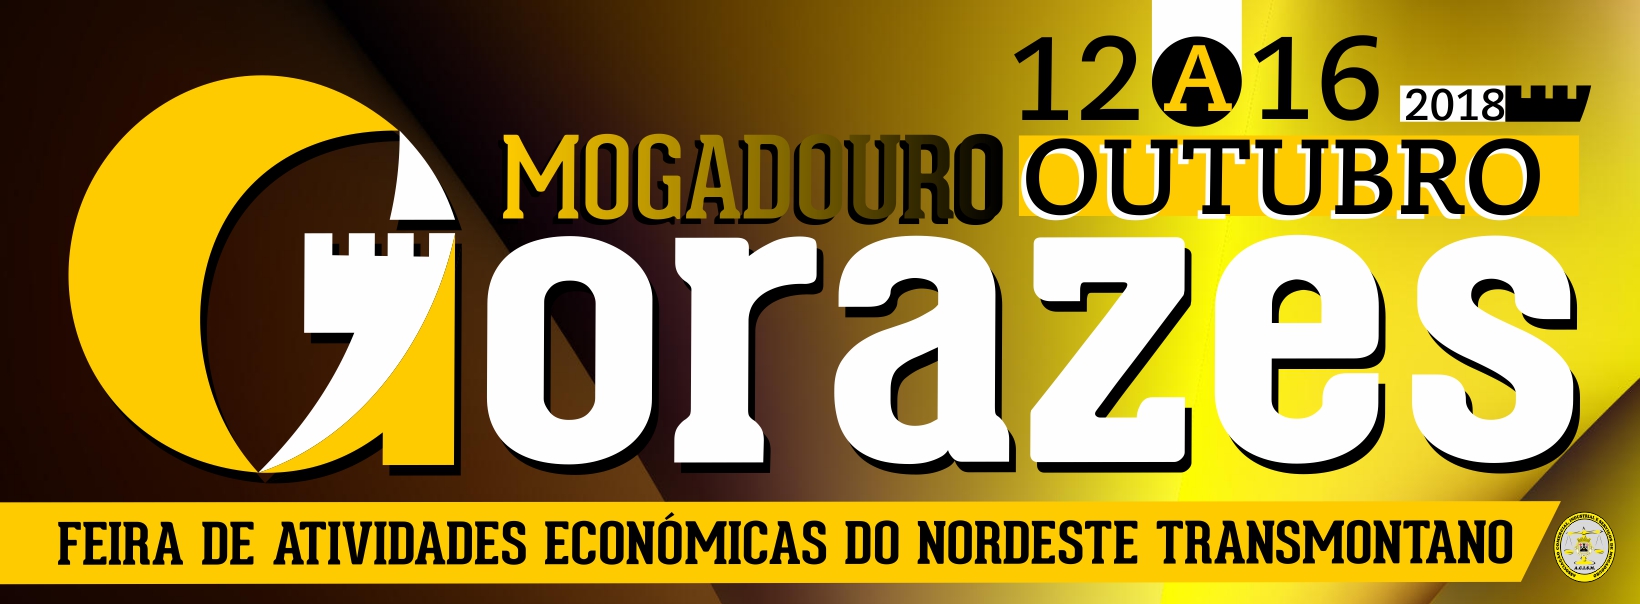 Feira-Gorazes-2018-ACISM-Mogadouro